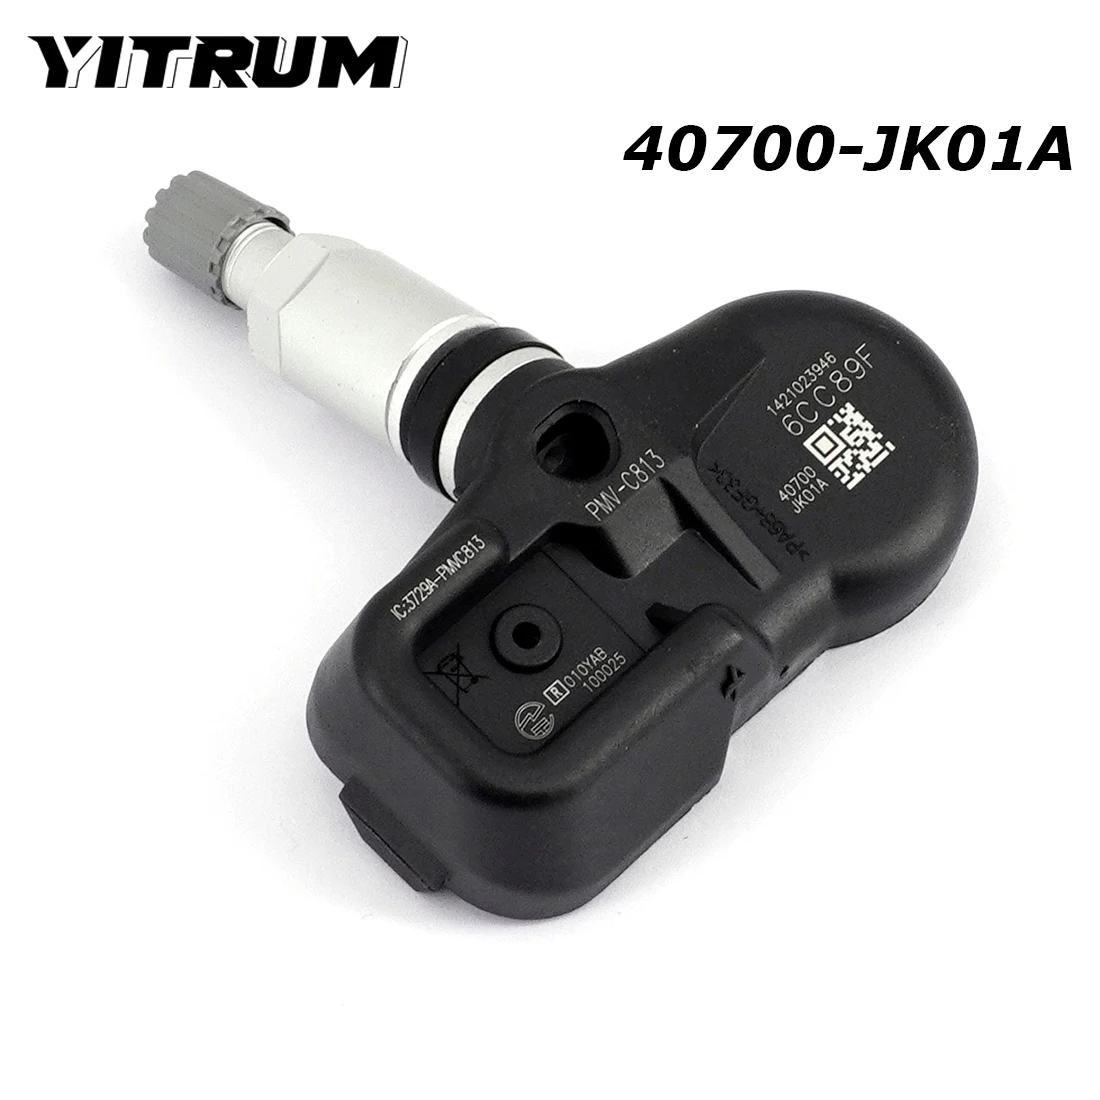 

YITRUM 40700-JK01A Tire Pressure Sensor TPMS For Nissan Rogue X-Trail Murano Infiniti EX35 G37 FX35 G35 40700-JK01B PMV-C813